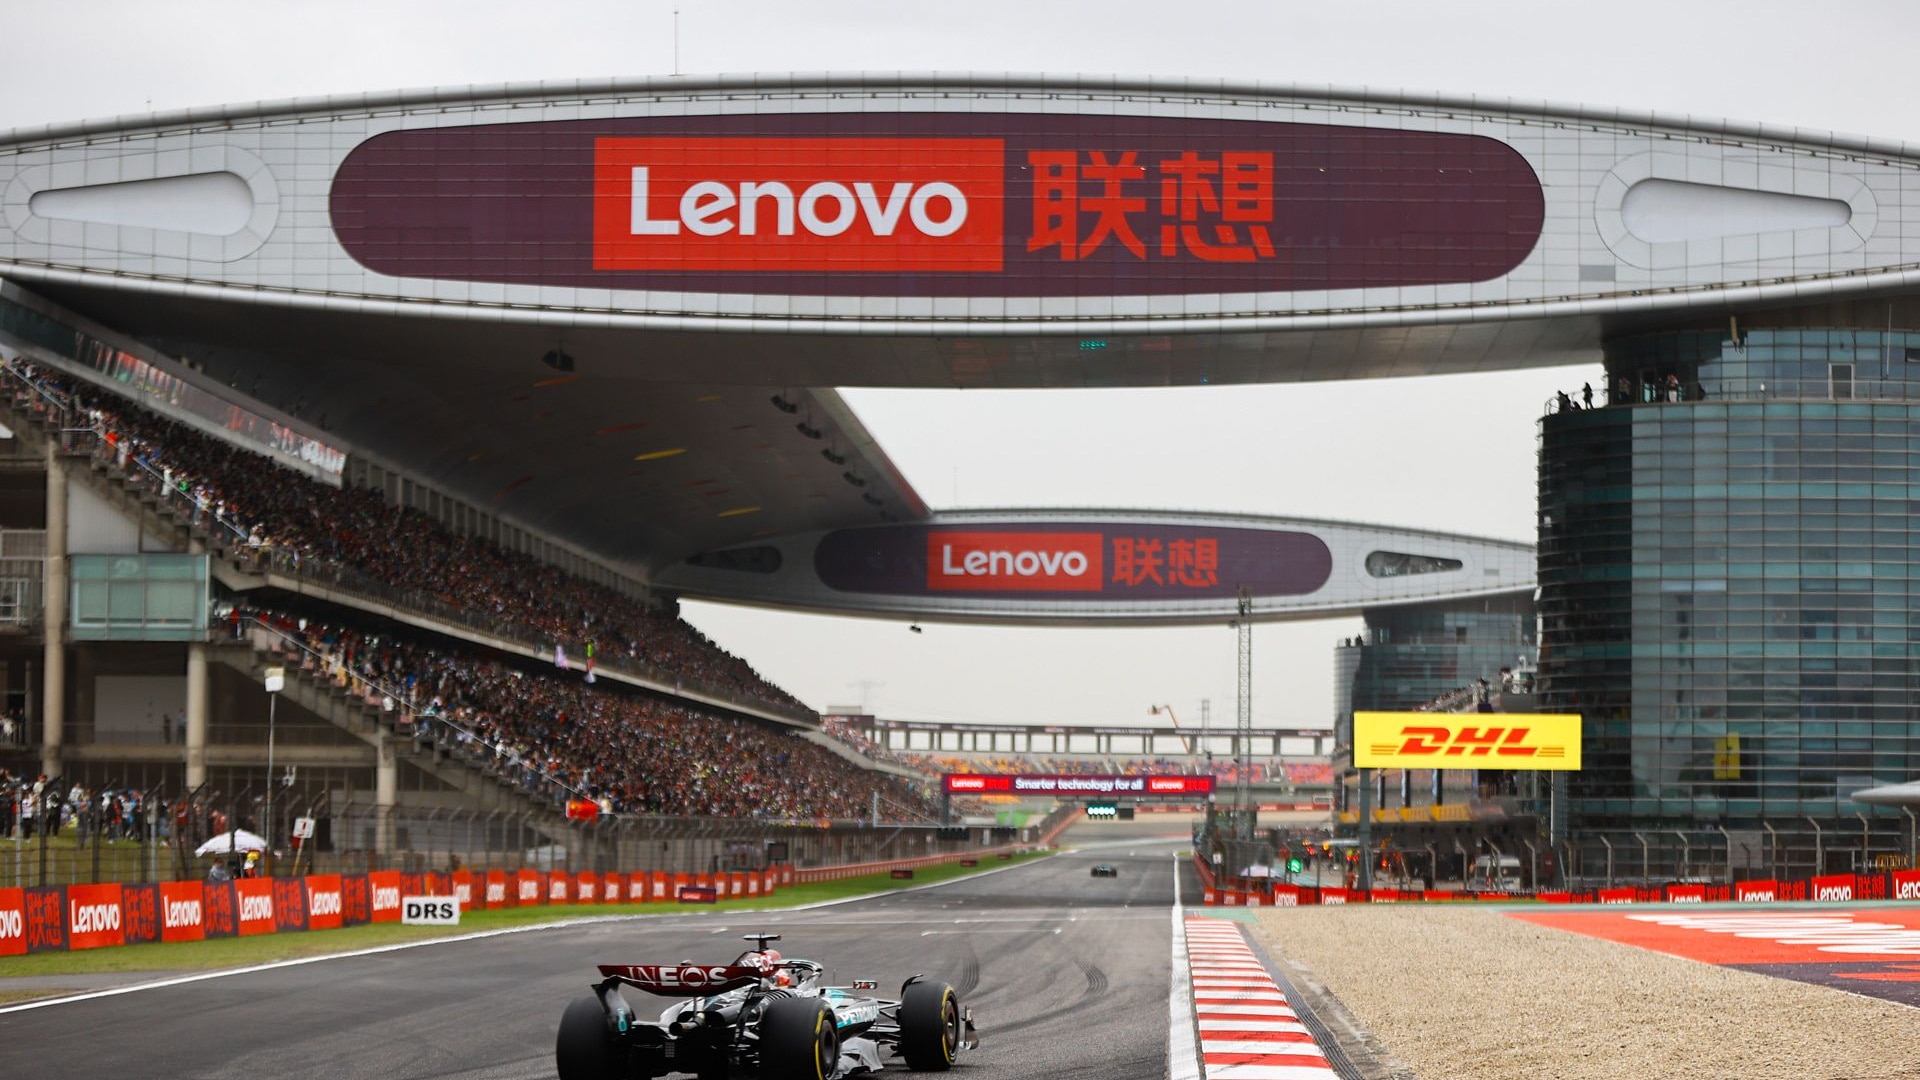 Shanghai International Circuit, home of the Formula 1 Chinese Grand Prix